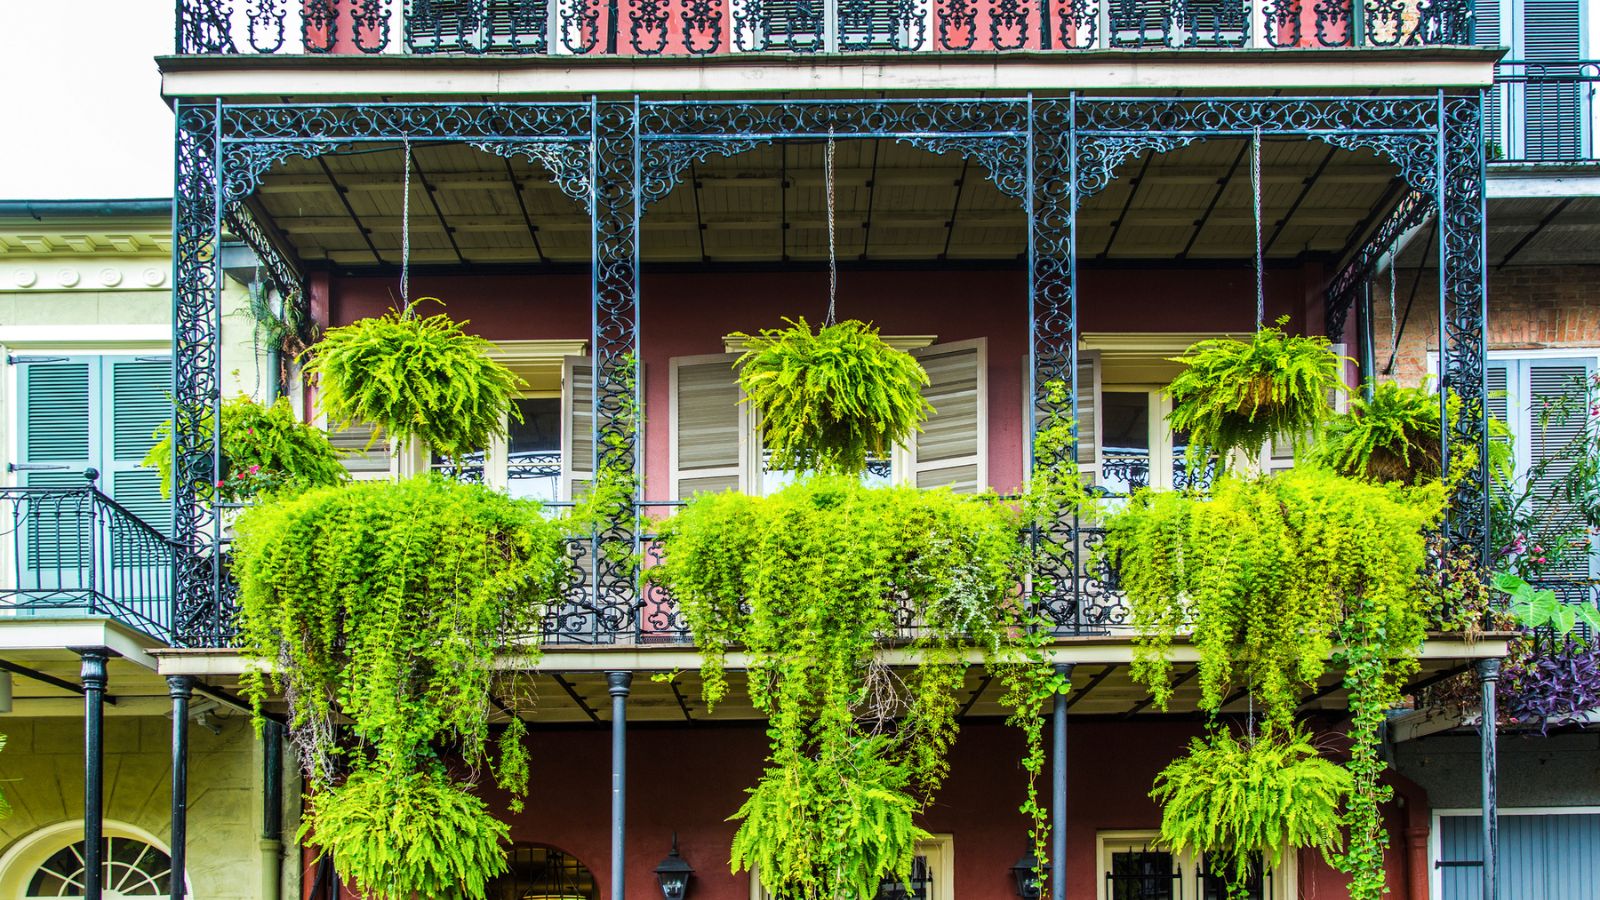 New Orleans Beyond Bourbon Street